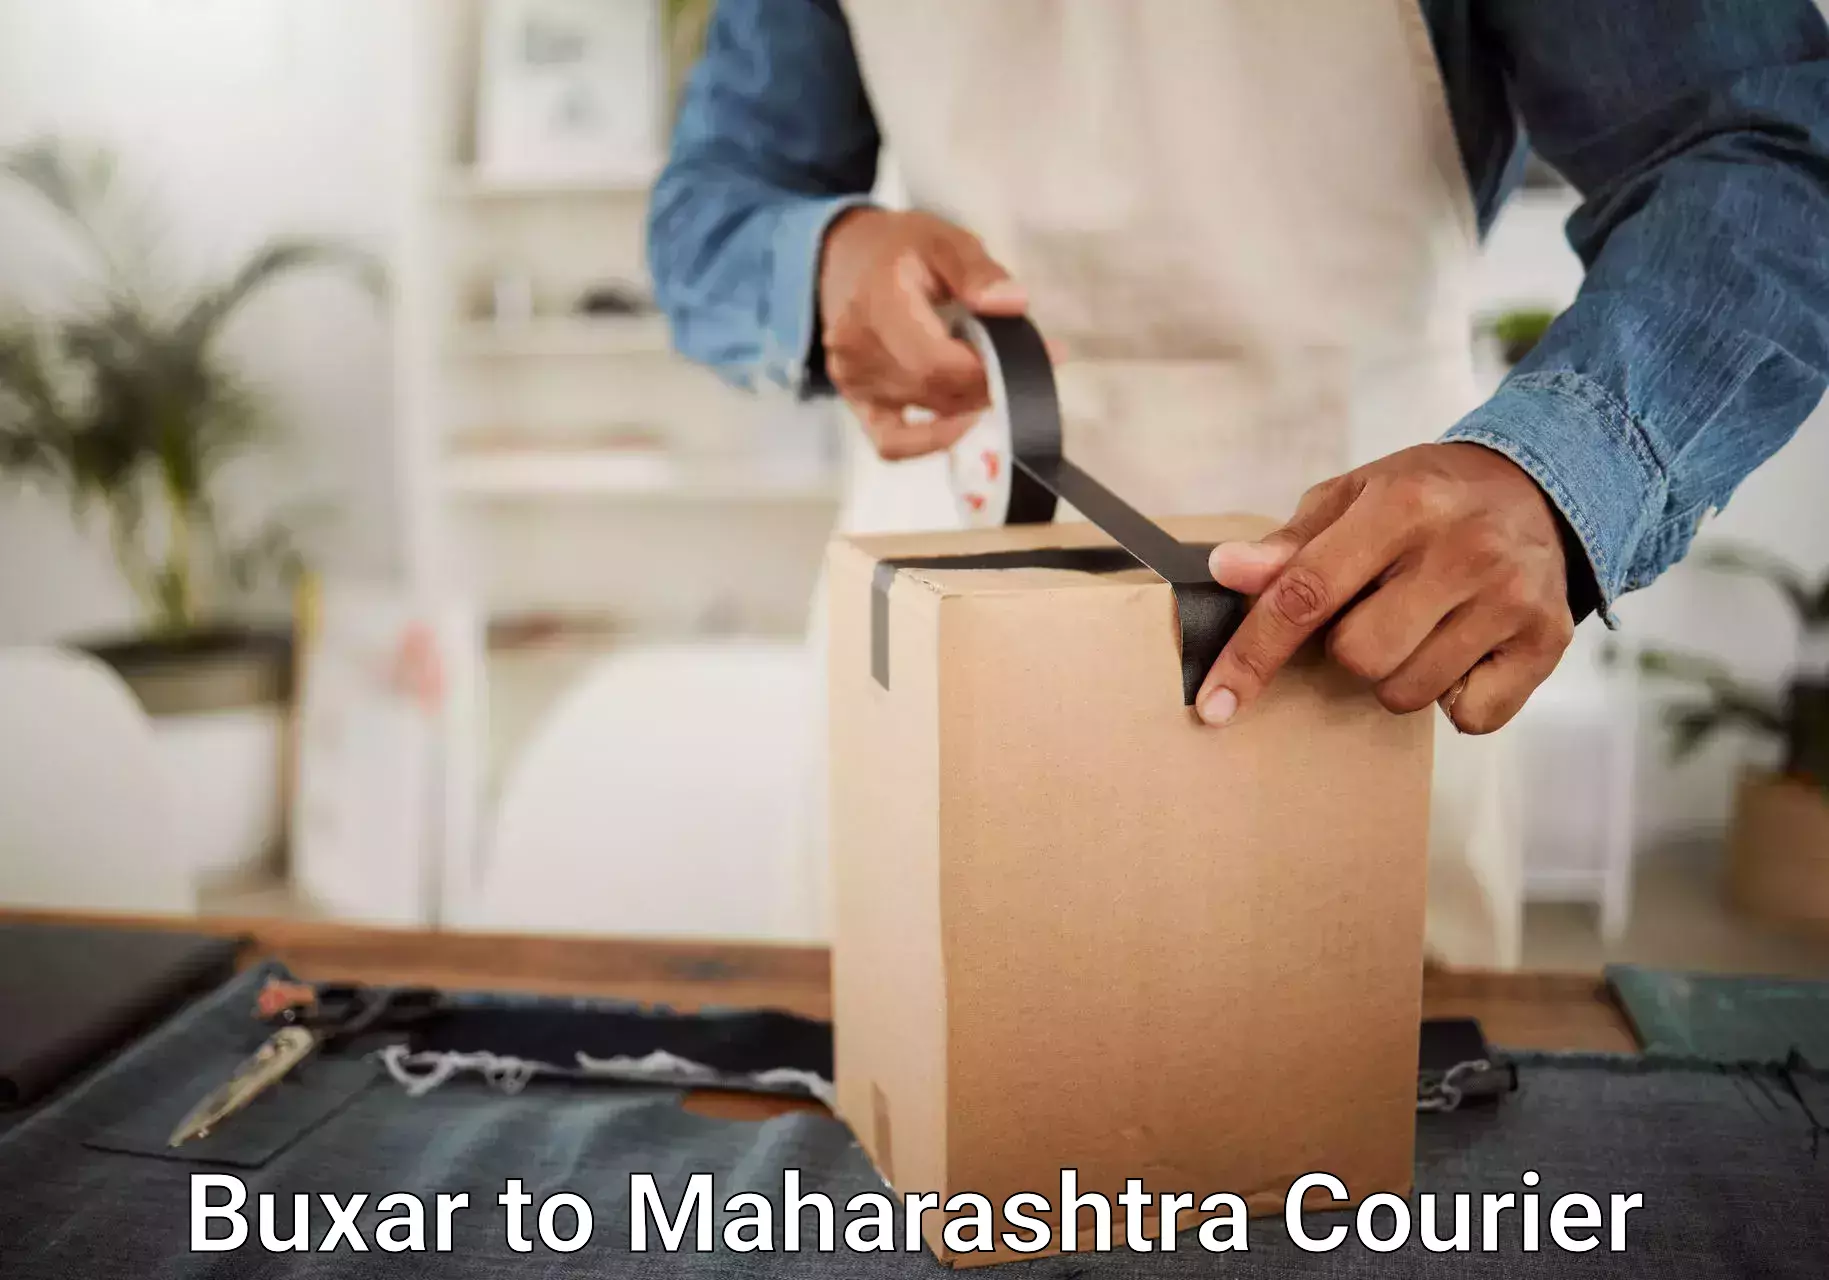 Luggage transport consultancy Buxar to Maharashtra